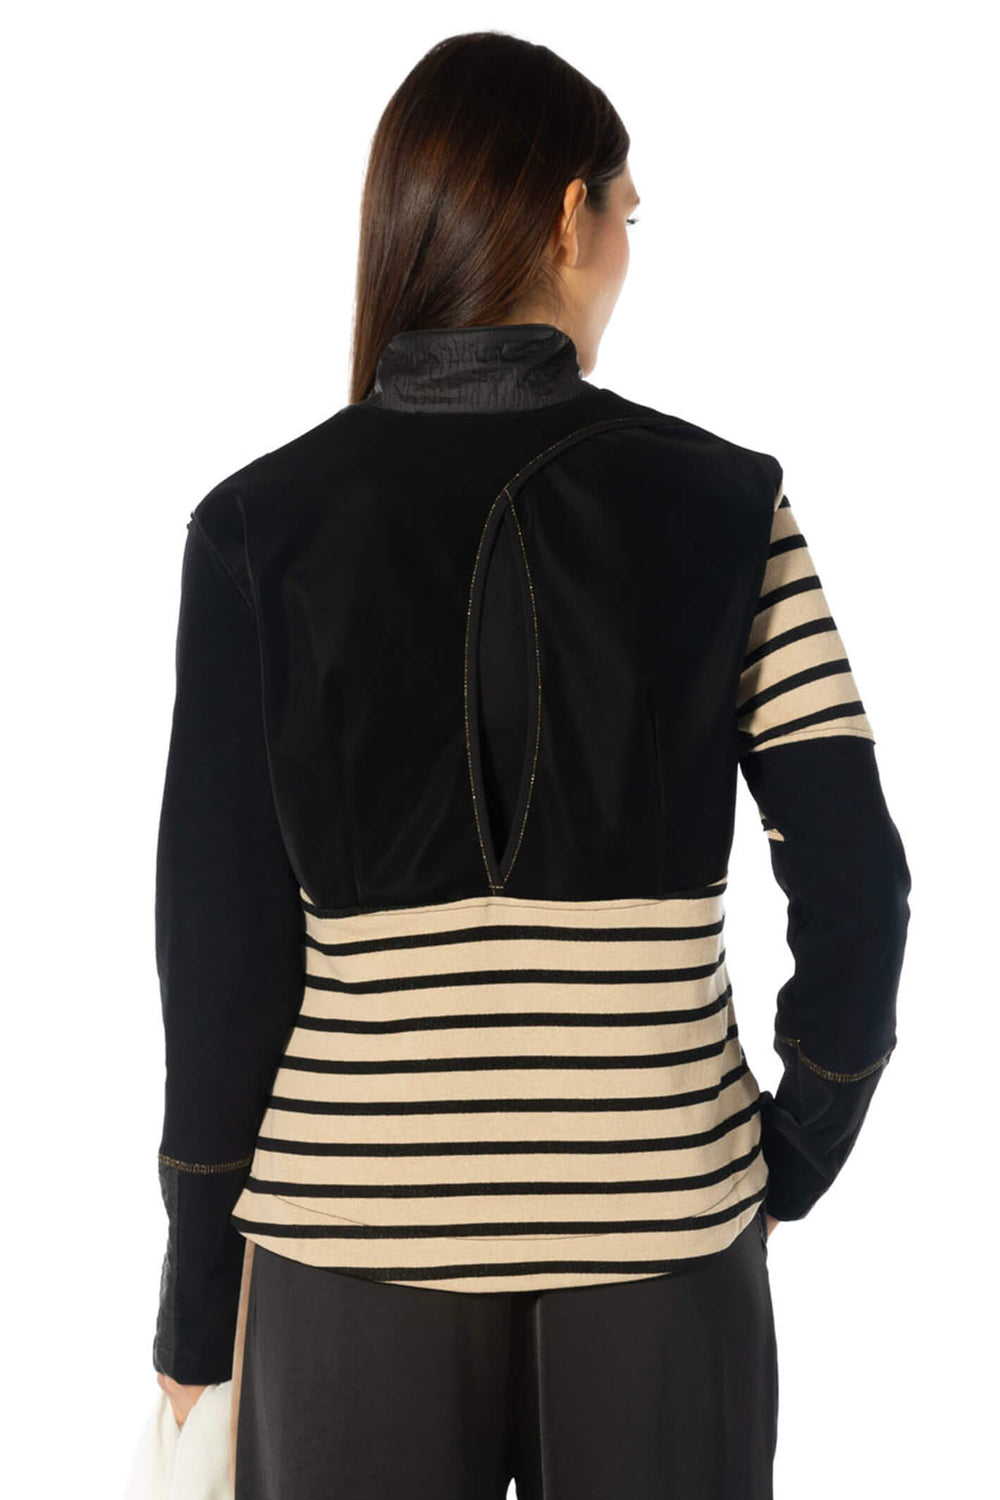 Elisa Cavaletti ELW237002810 Black Stripe Jacket - Experience Boutique